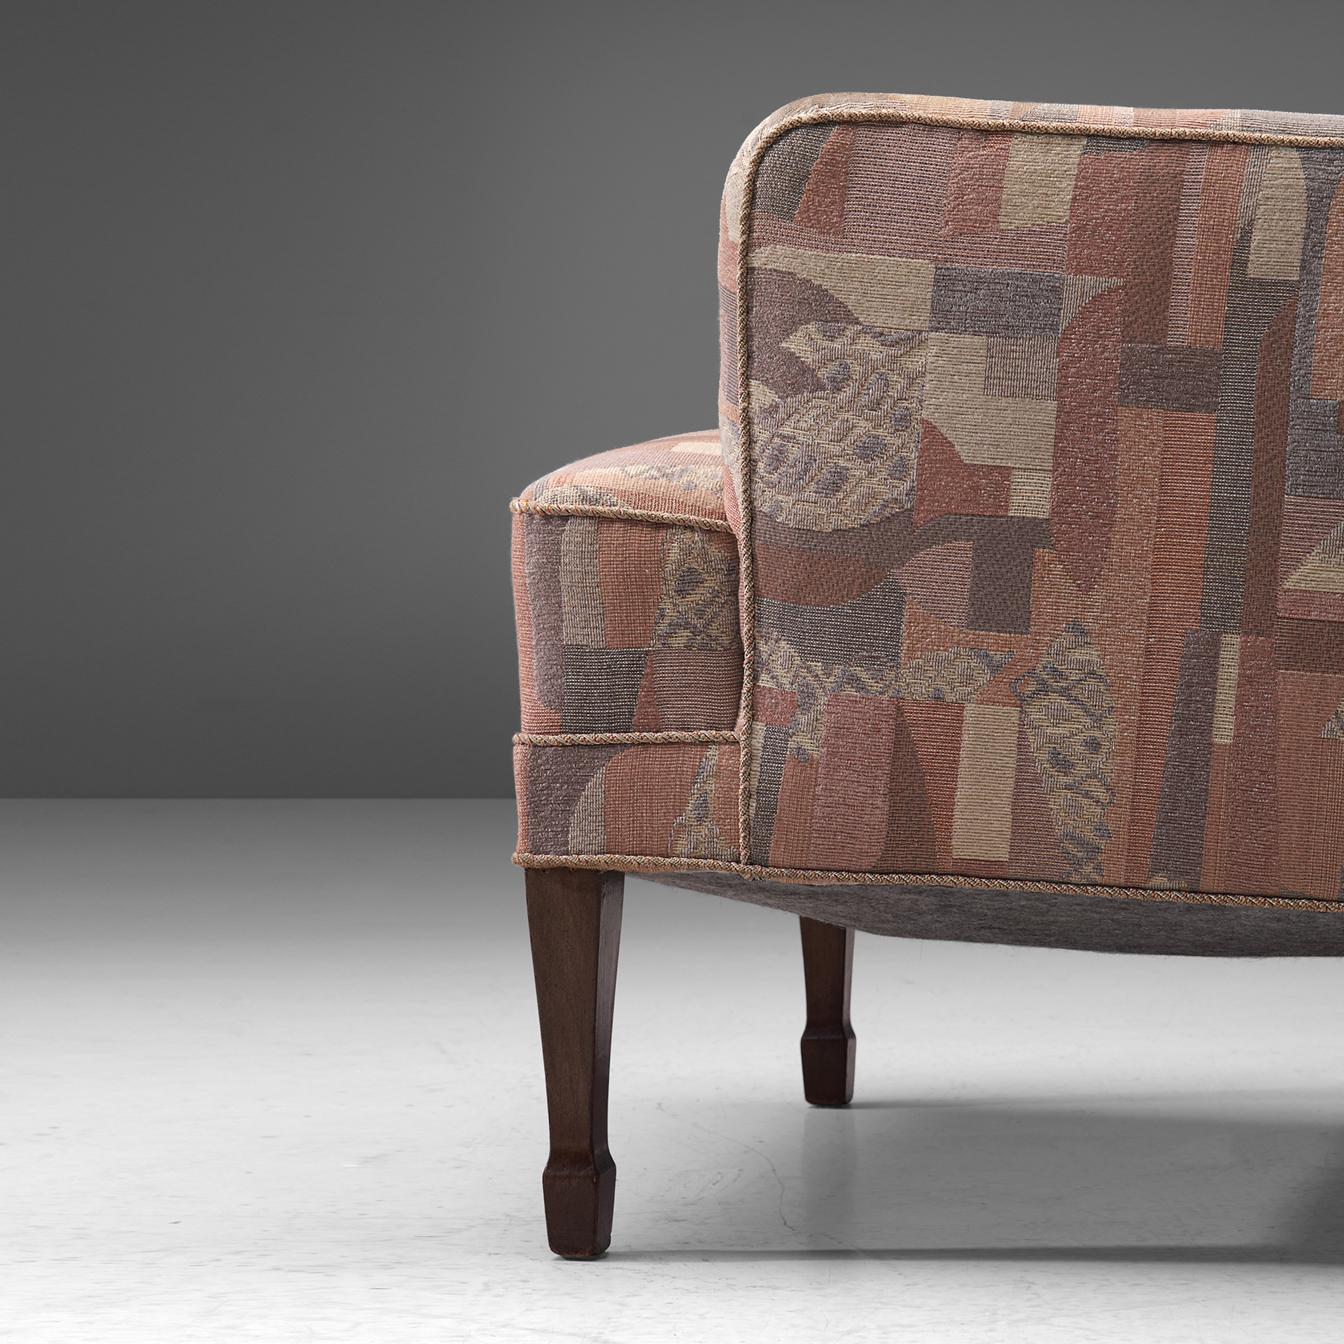 Scandinavian Modern Frits Henningsen Lounge Chair in Patterned Upholstery For Sale